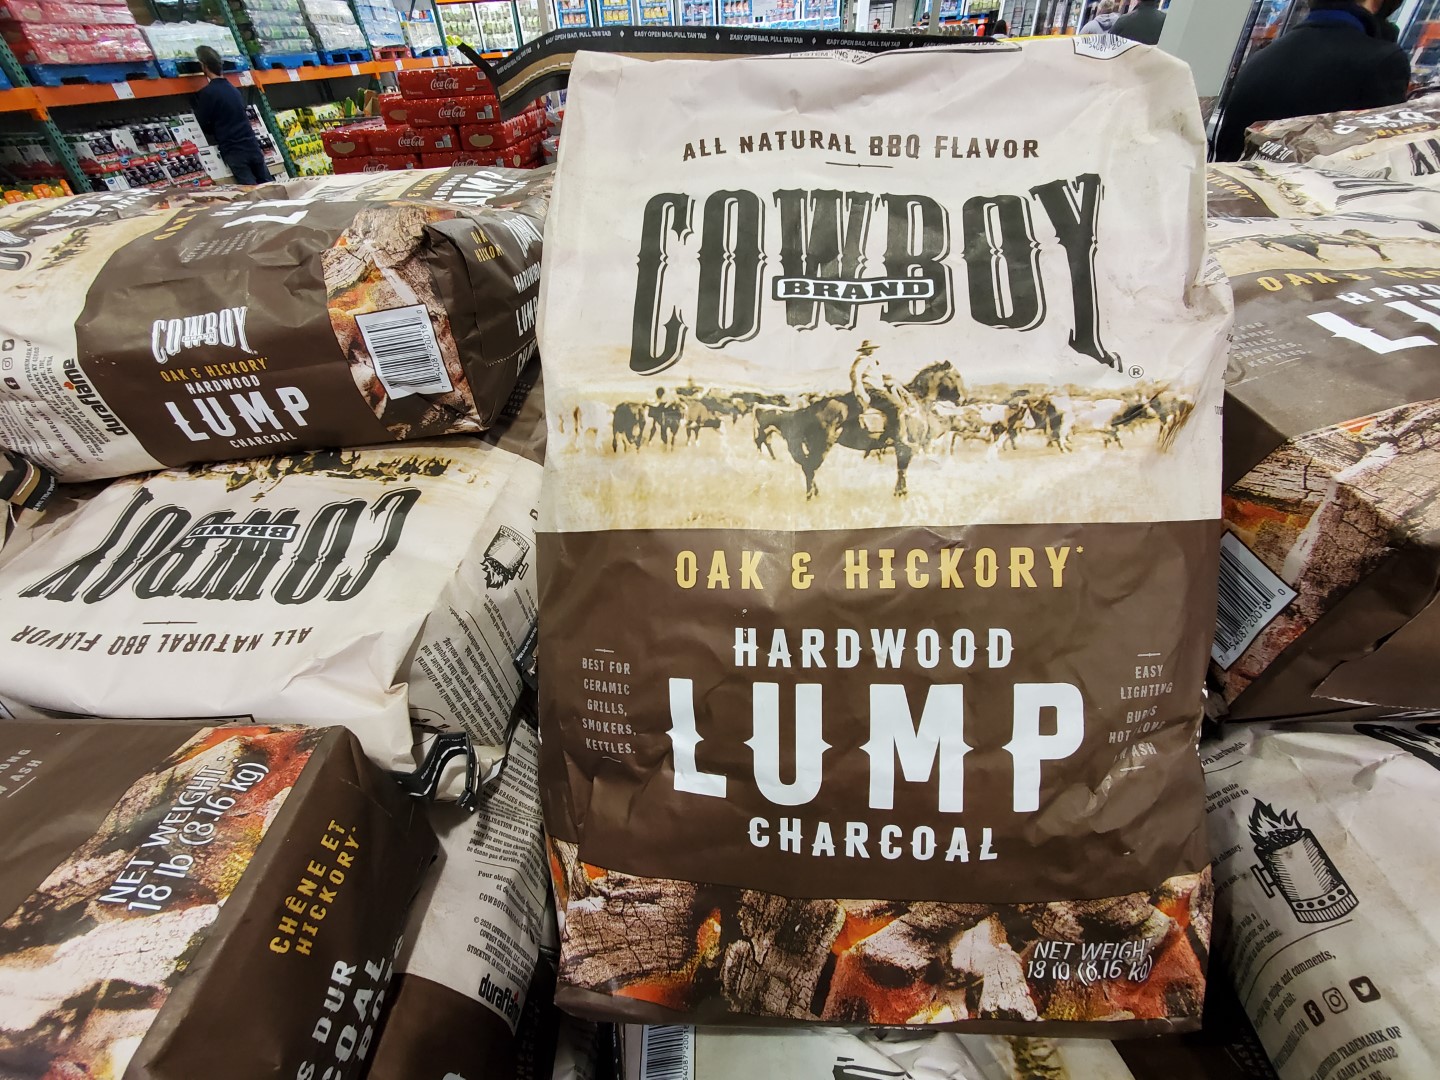 Cowboy Brand lump charcoal